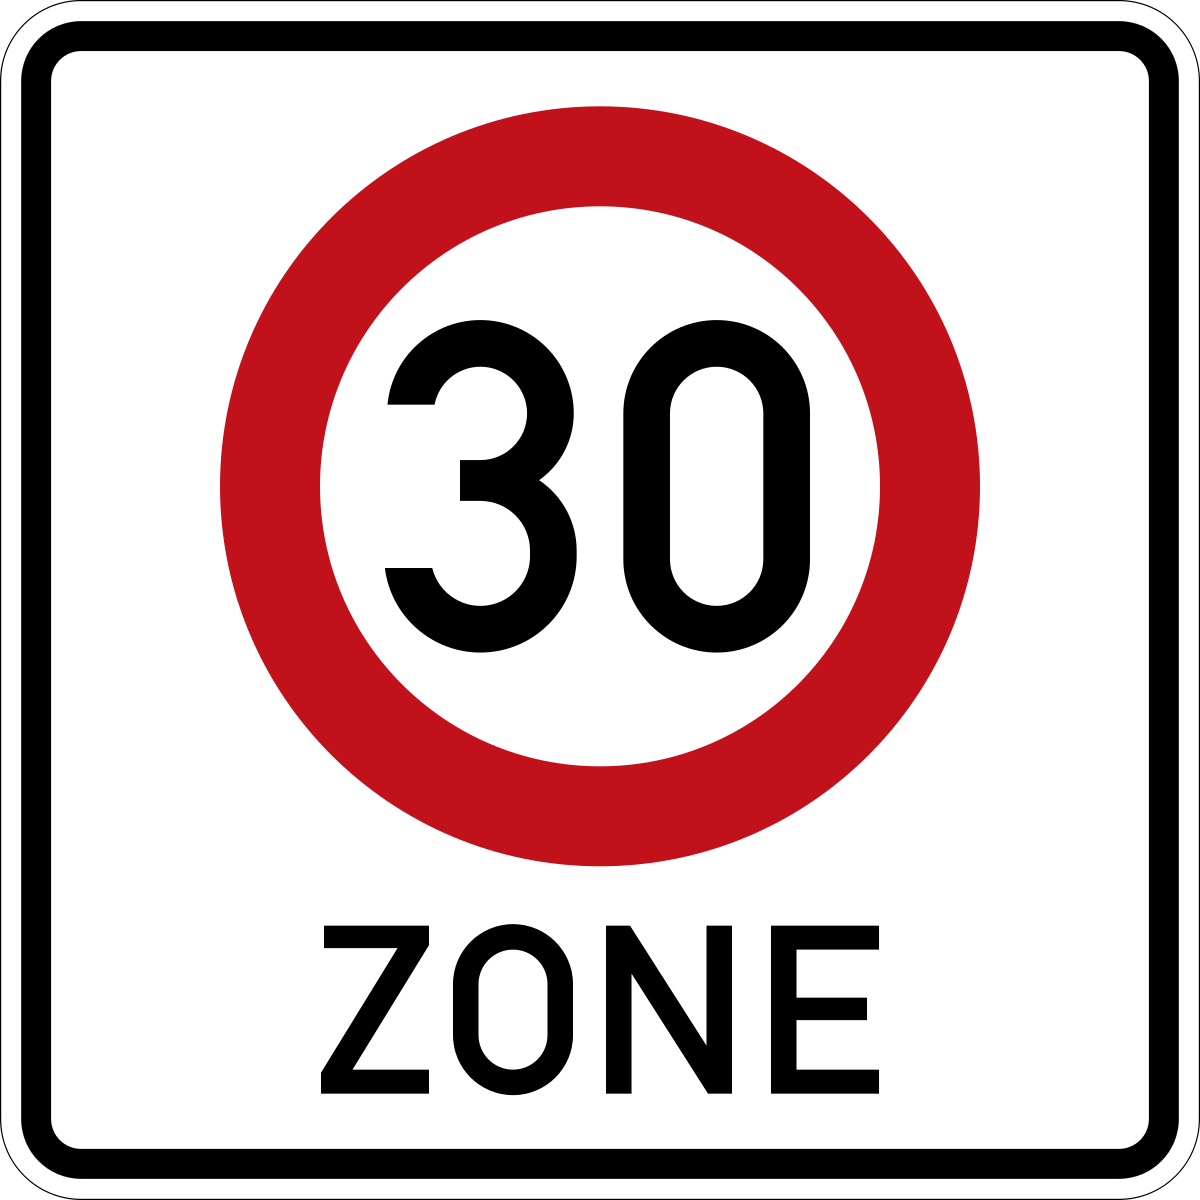 30 Km H Zone 20 Mph Zone Wikidata